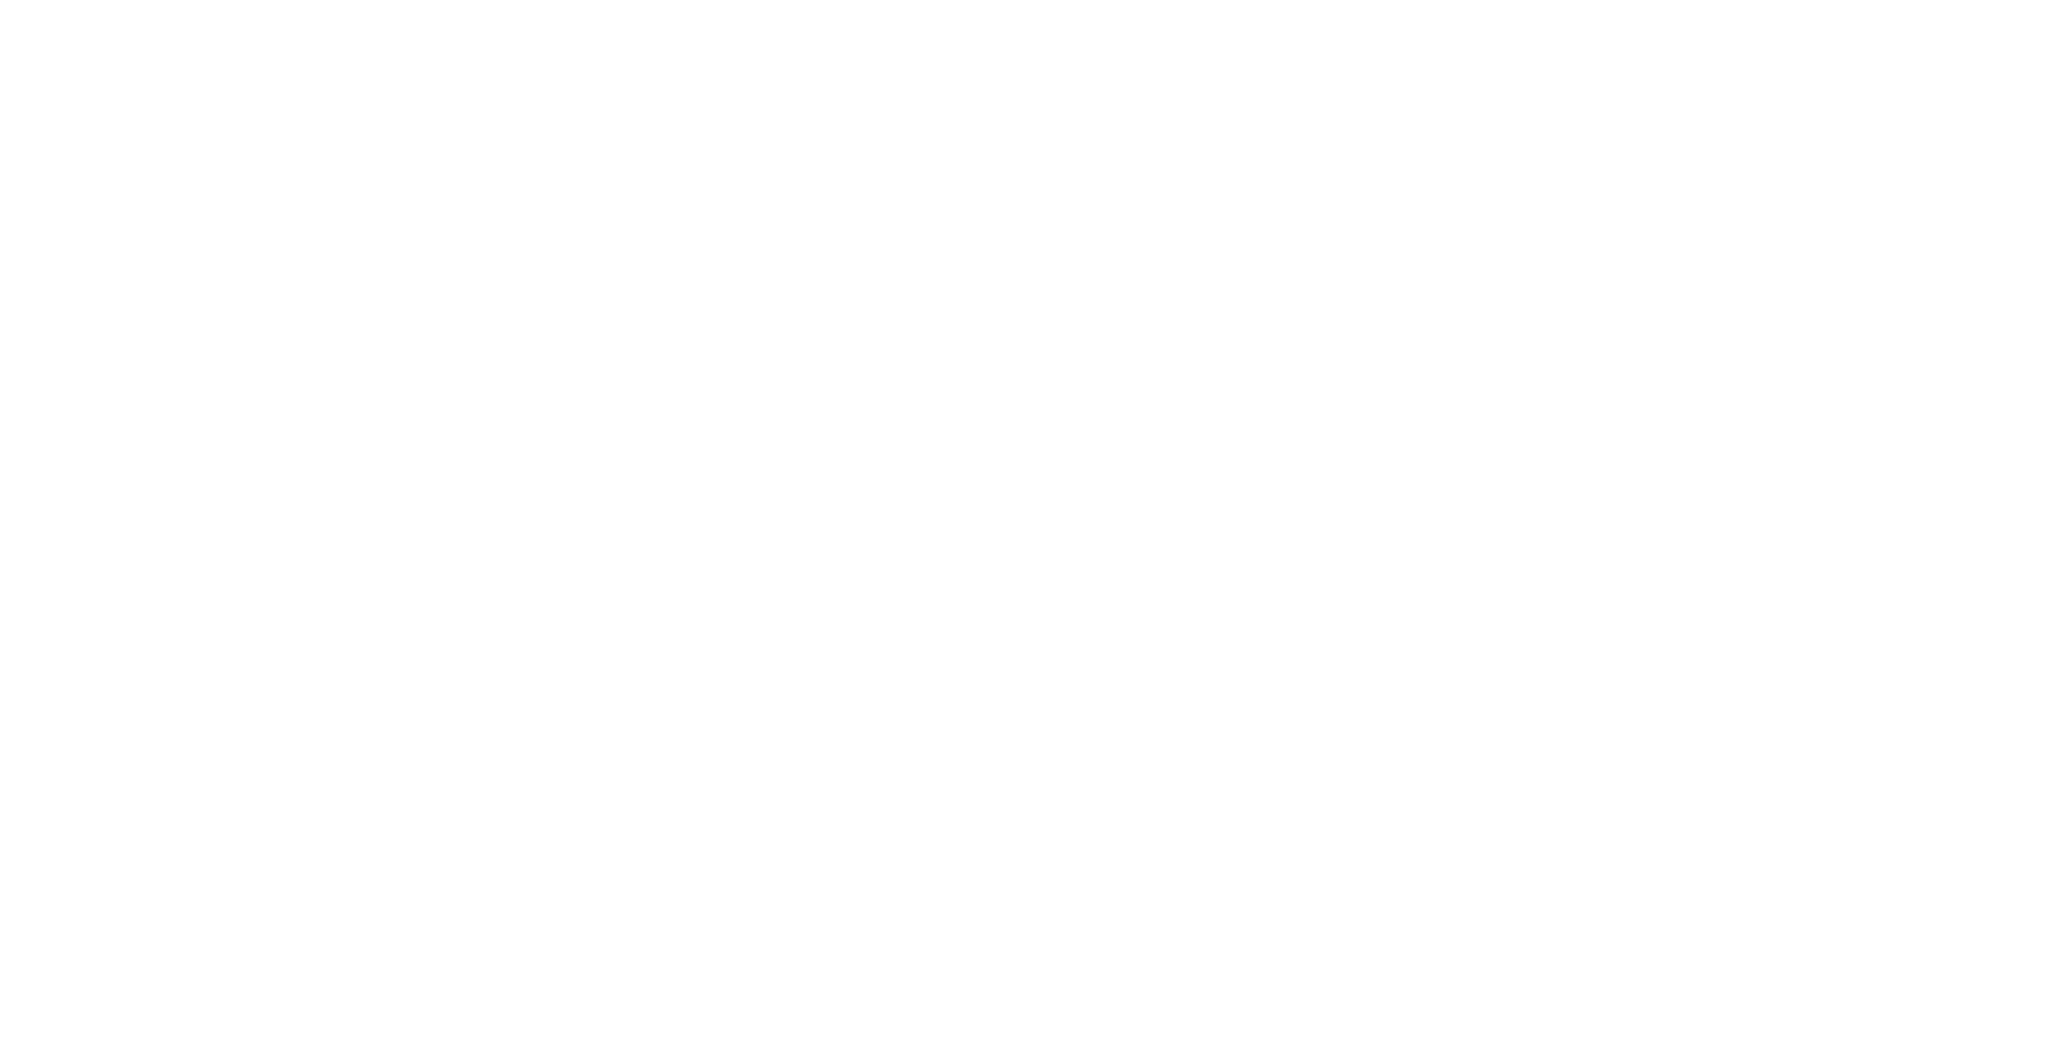 Pennsylvania Medical Society logo